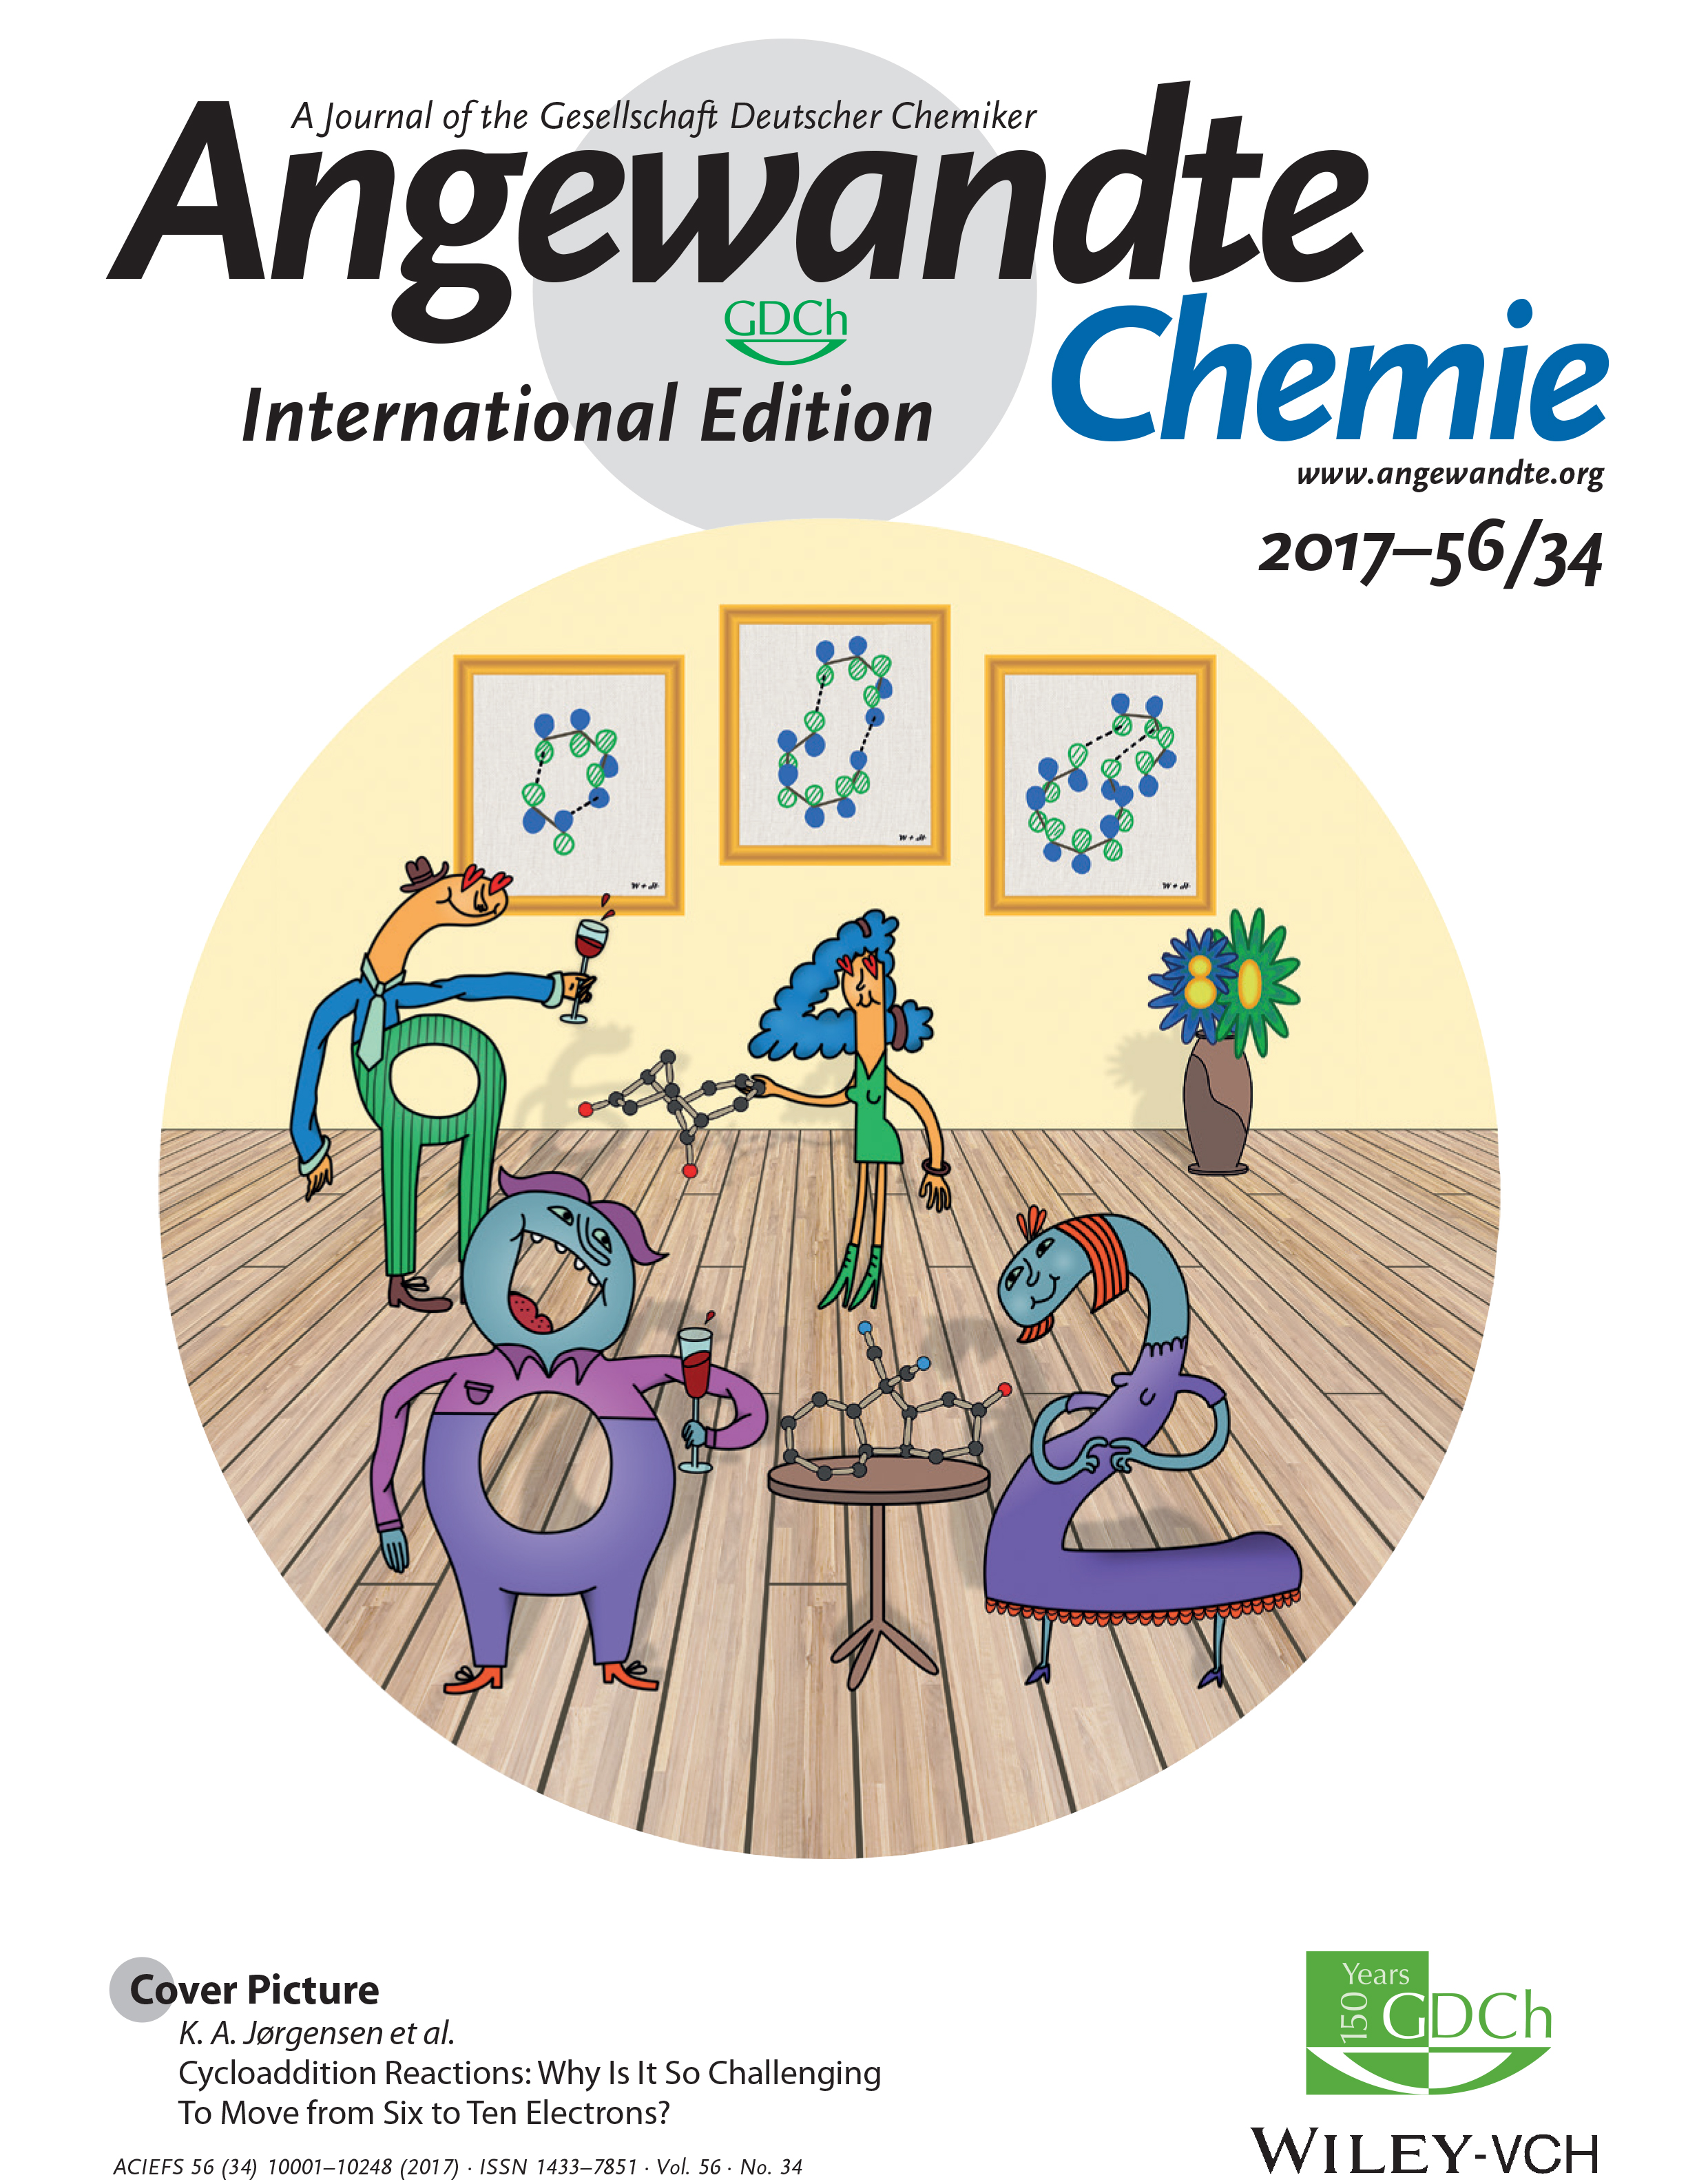 Palazzo_et_al-2017-Angewandte_Chemie_International_Edition.jpg